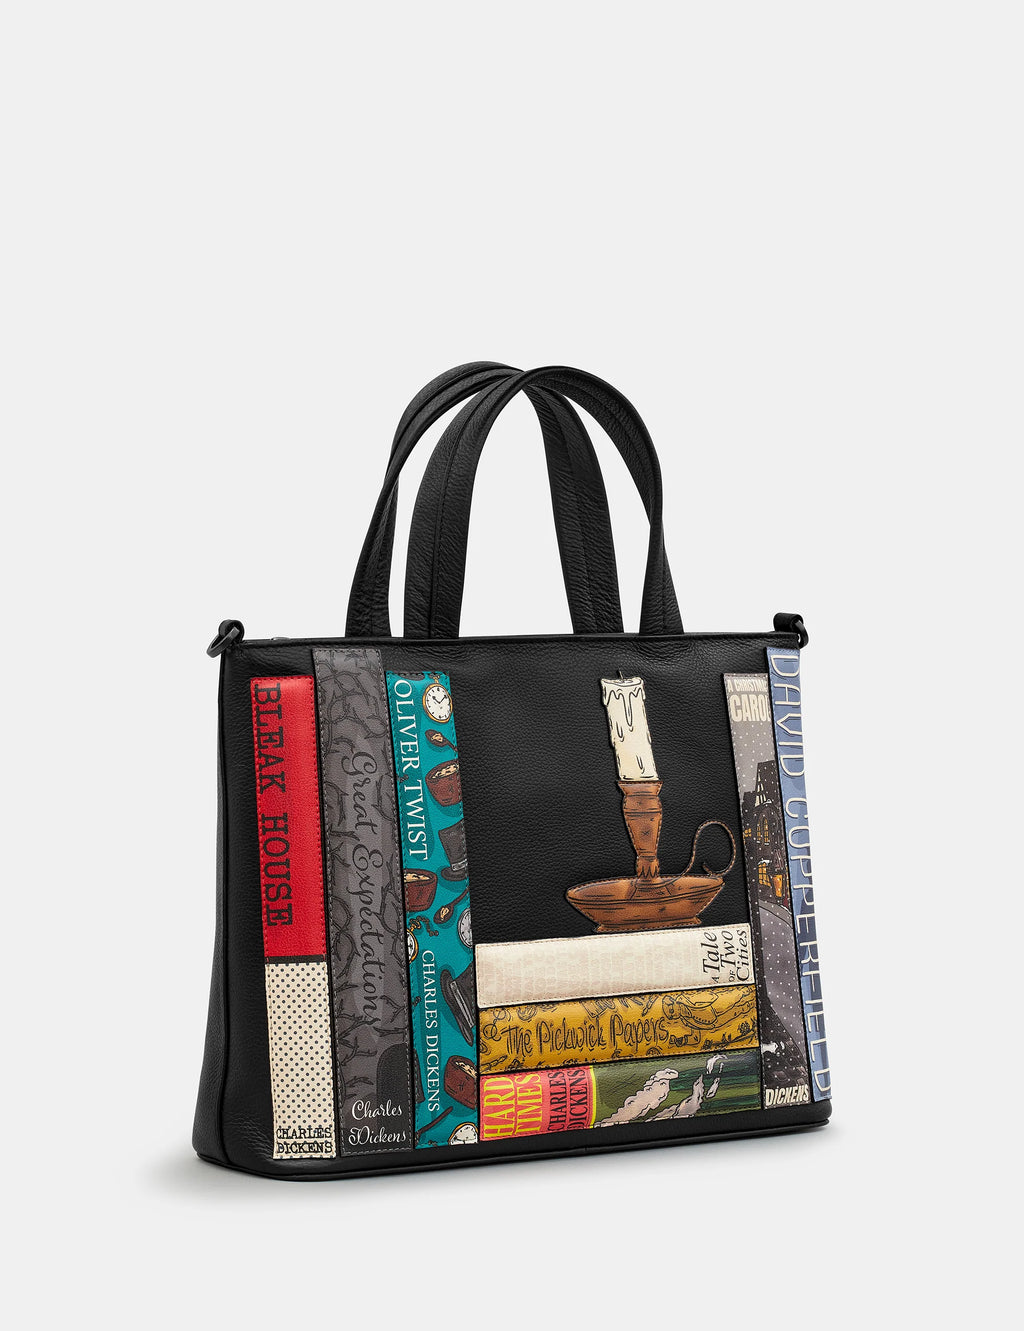 Yoshi - Dickens Bookworm Leather Grab Bag